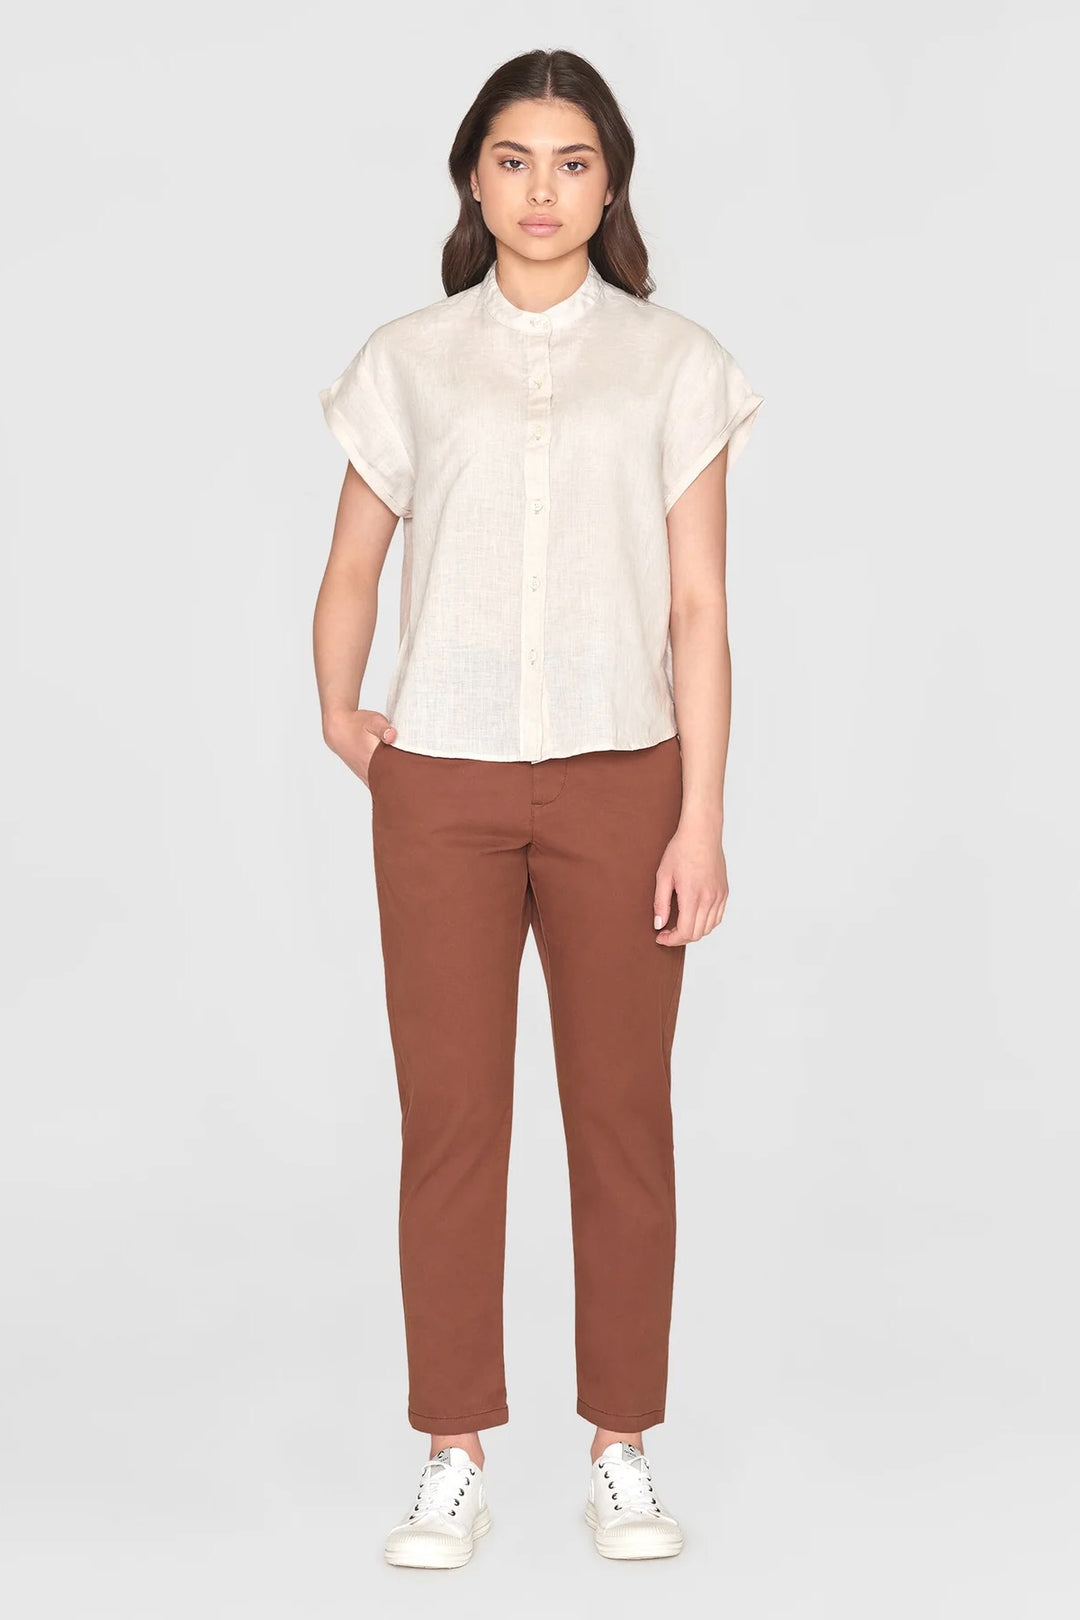 COLLAR Linen Shirt | KNOWLEDGE COTTON APPAREL